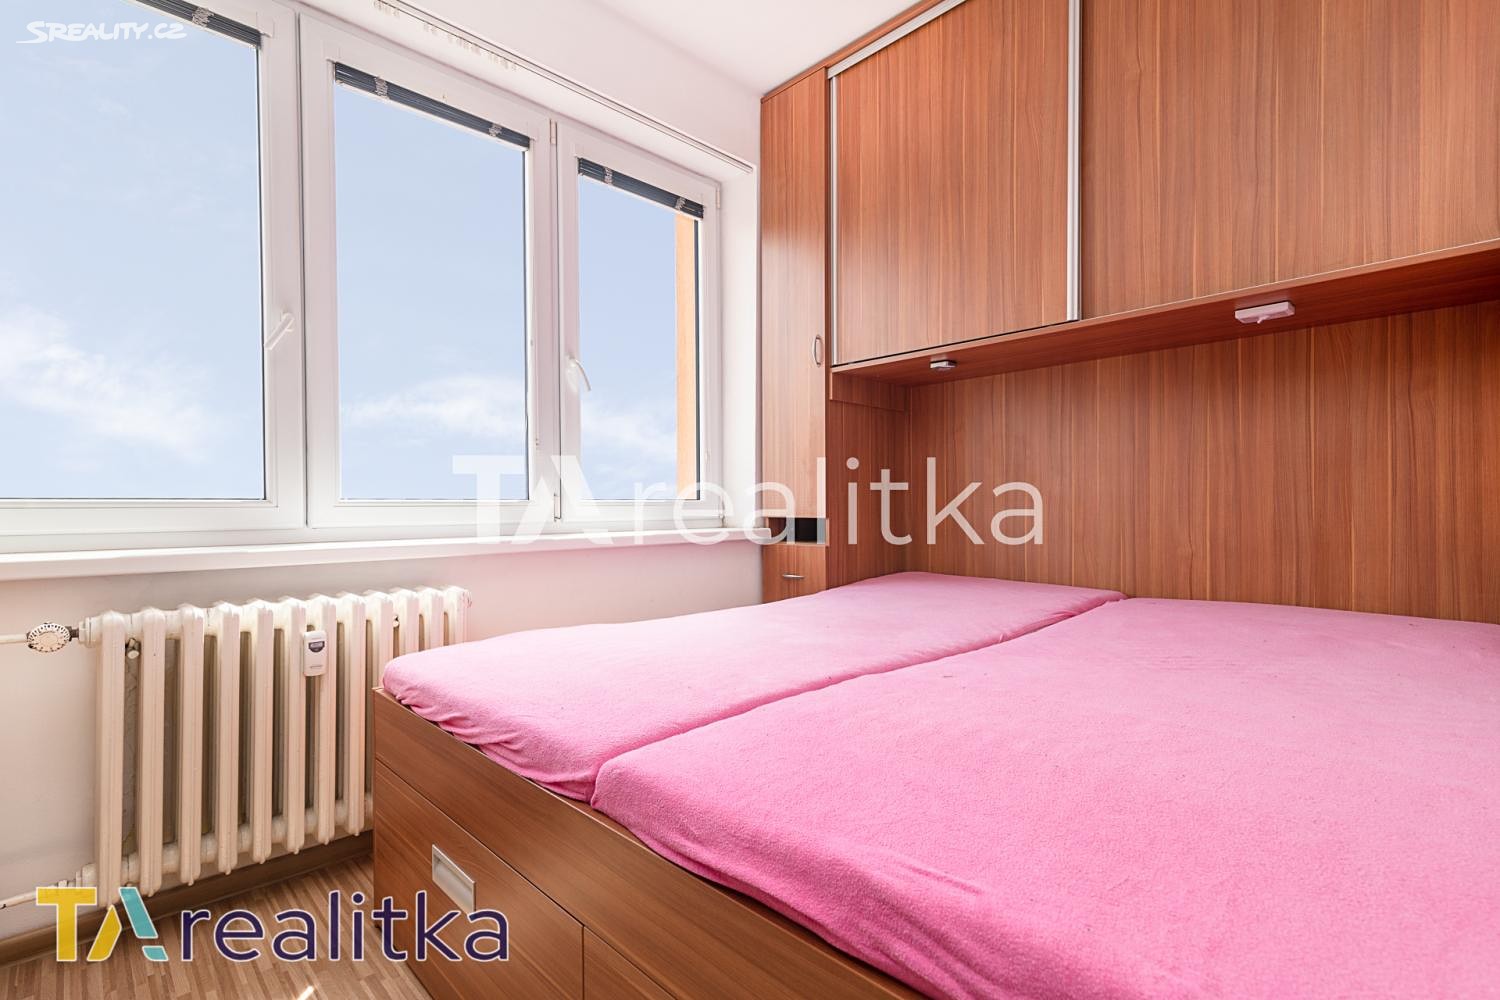 Prodej bytu 3+1 68 m², Studentská, Karviná - Mizerov